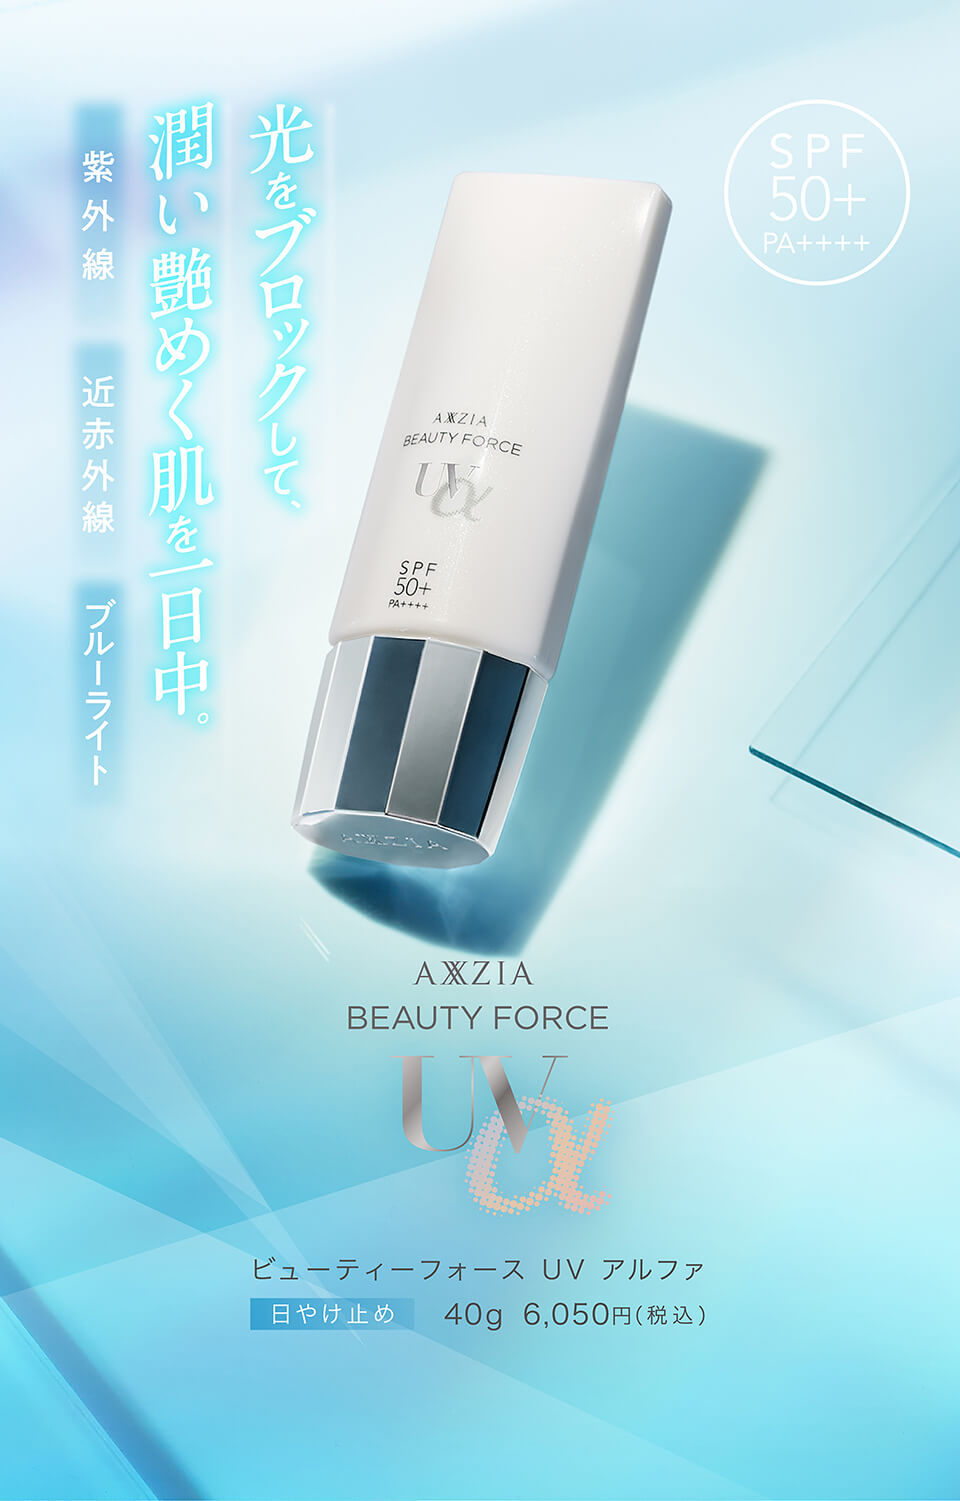 AXXZIA Beauty Force UV Alpha SPF 50+ PA ++++